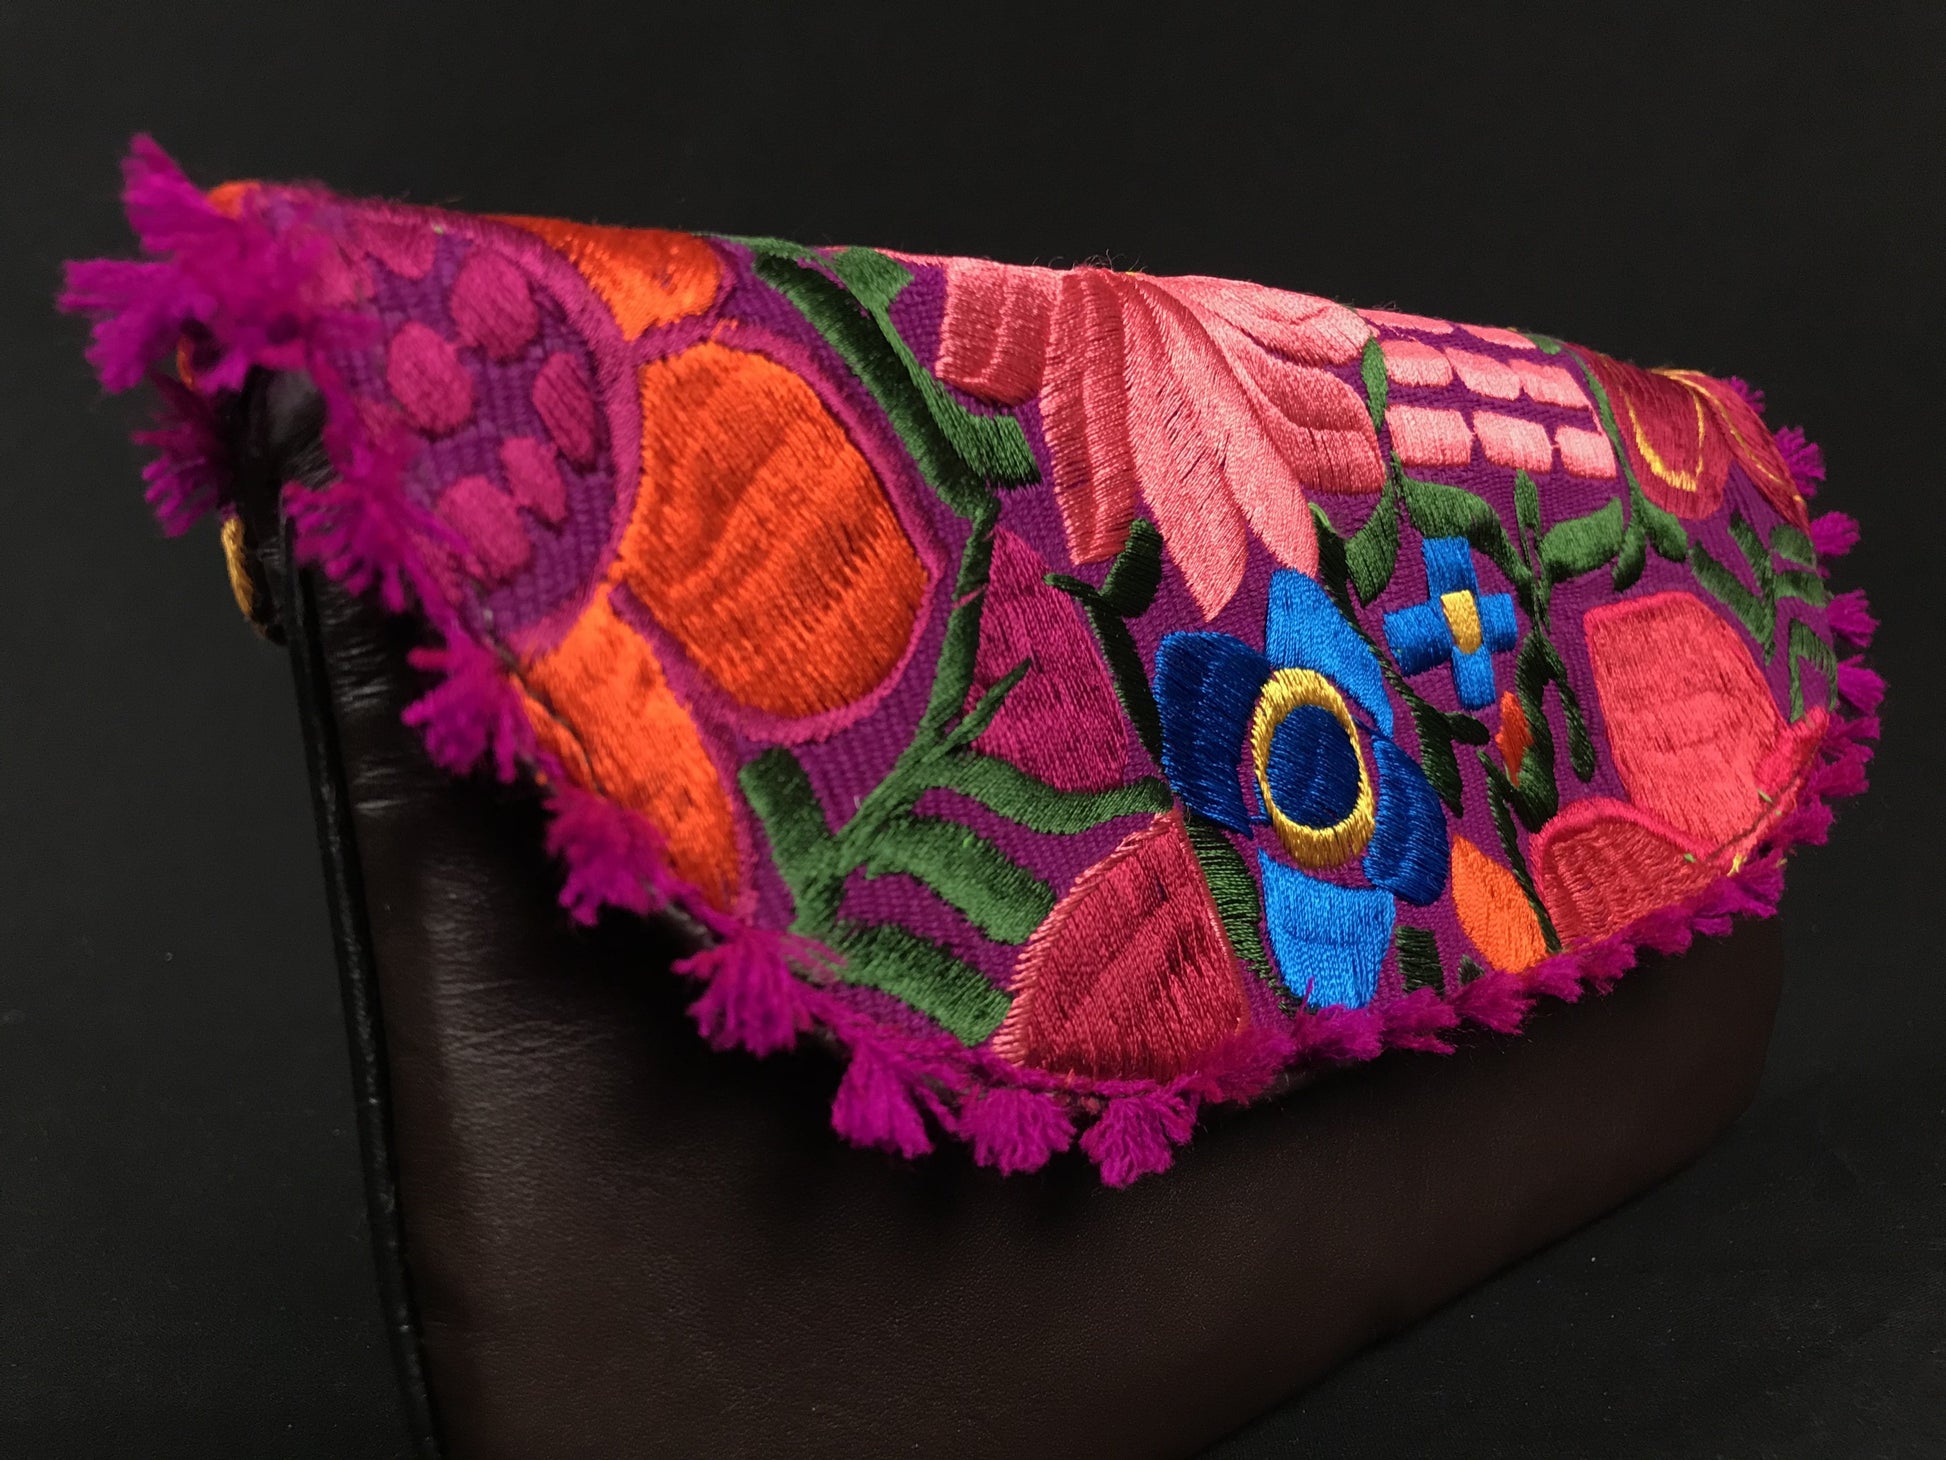 Guie Chiapas Embroidered Leather Wristlet Colores Decor